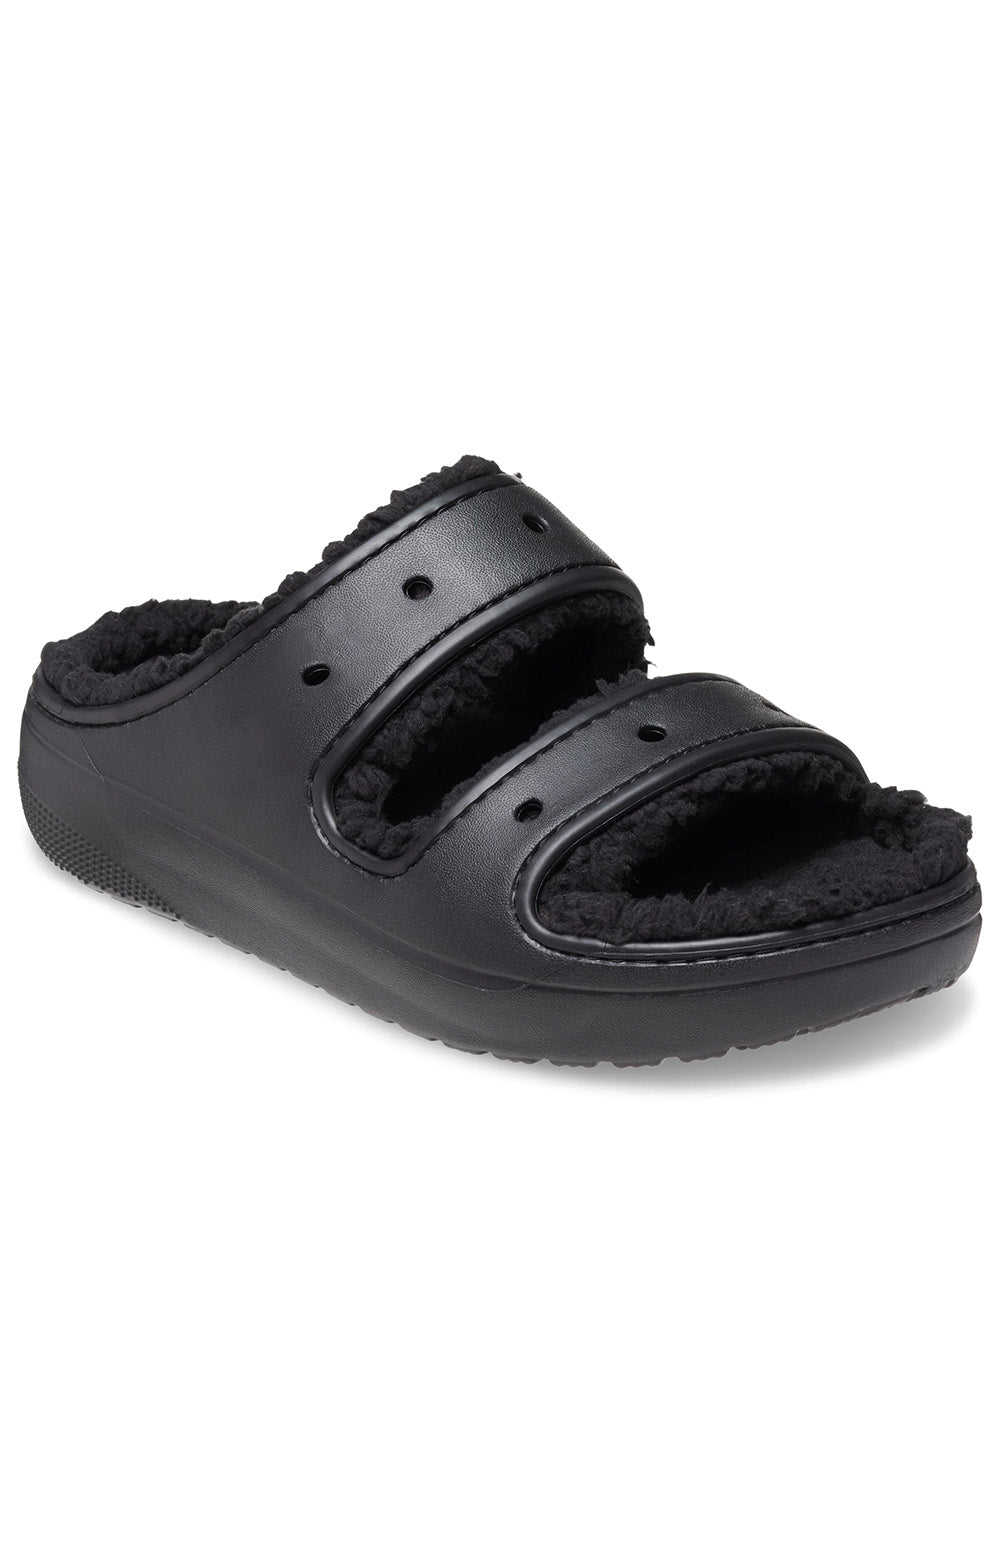 Classic Cozy Sandals - Black